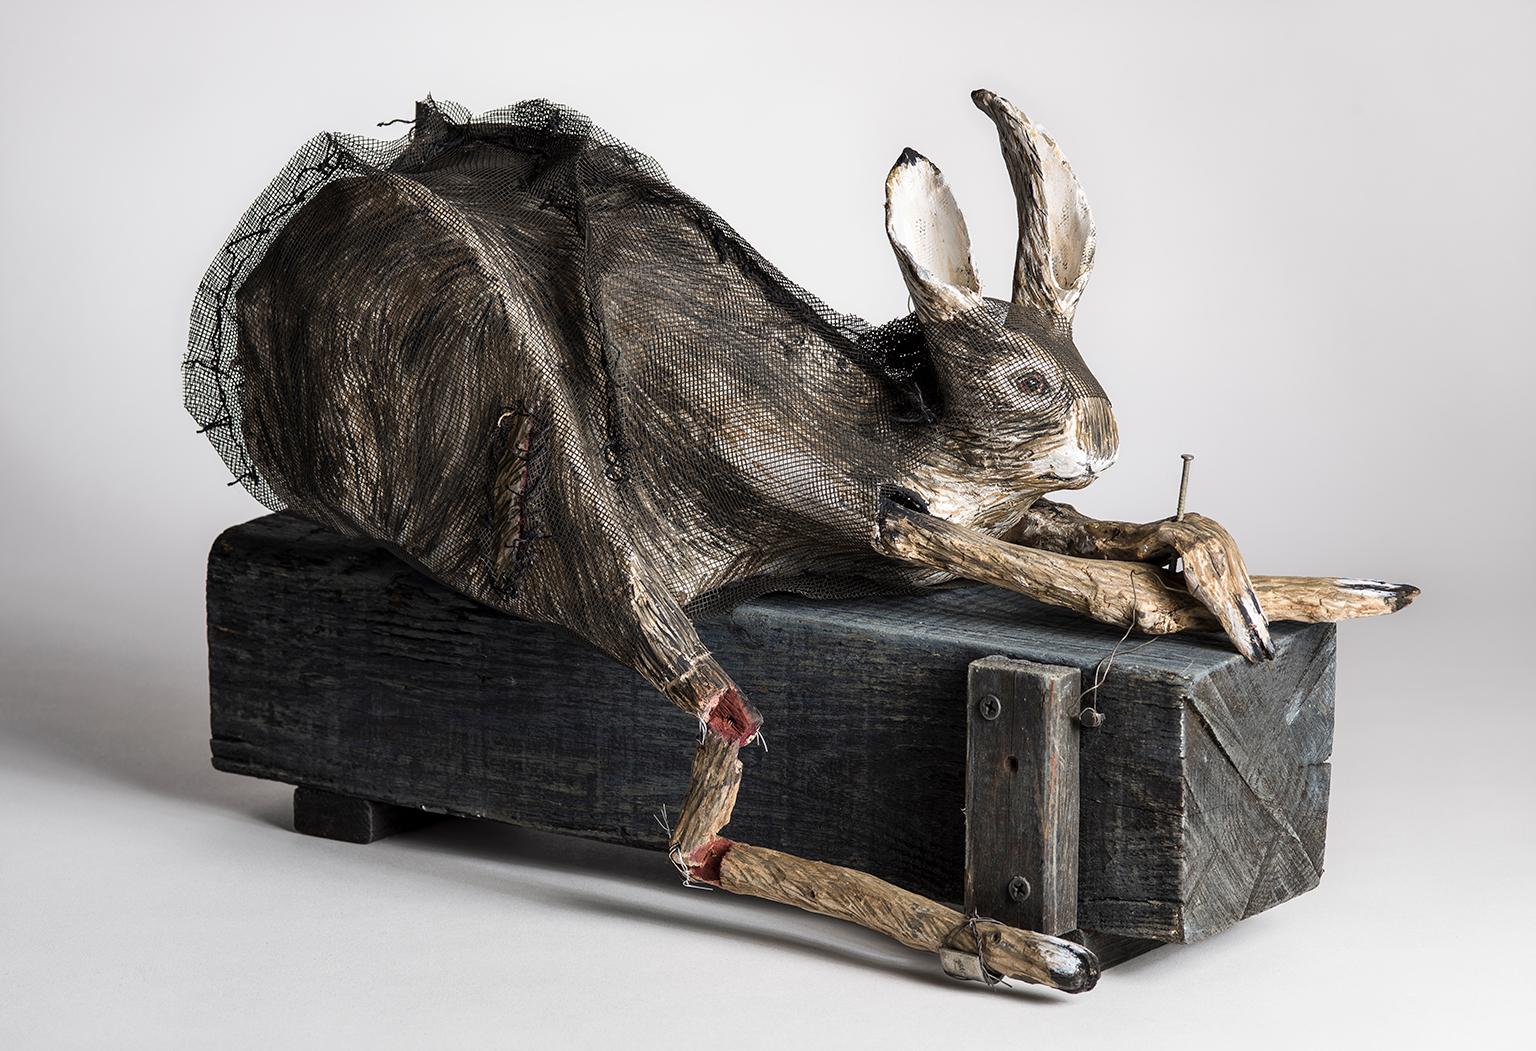 Sculpture of Rabbit on Wood Box: 'Imitation of Life'